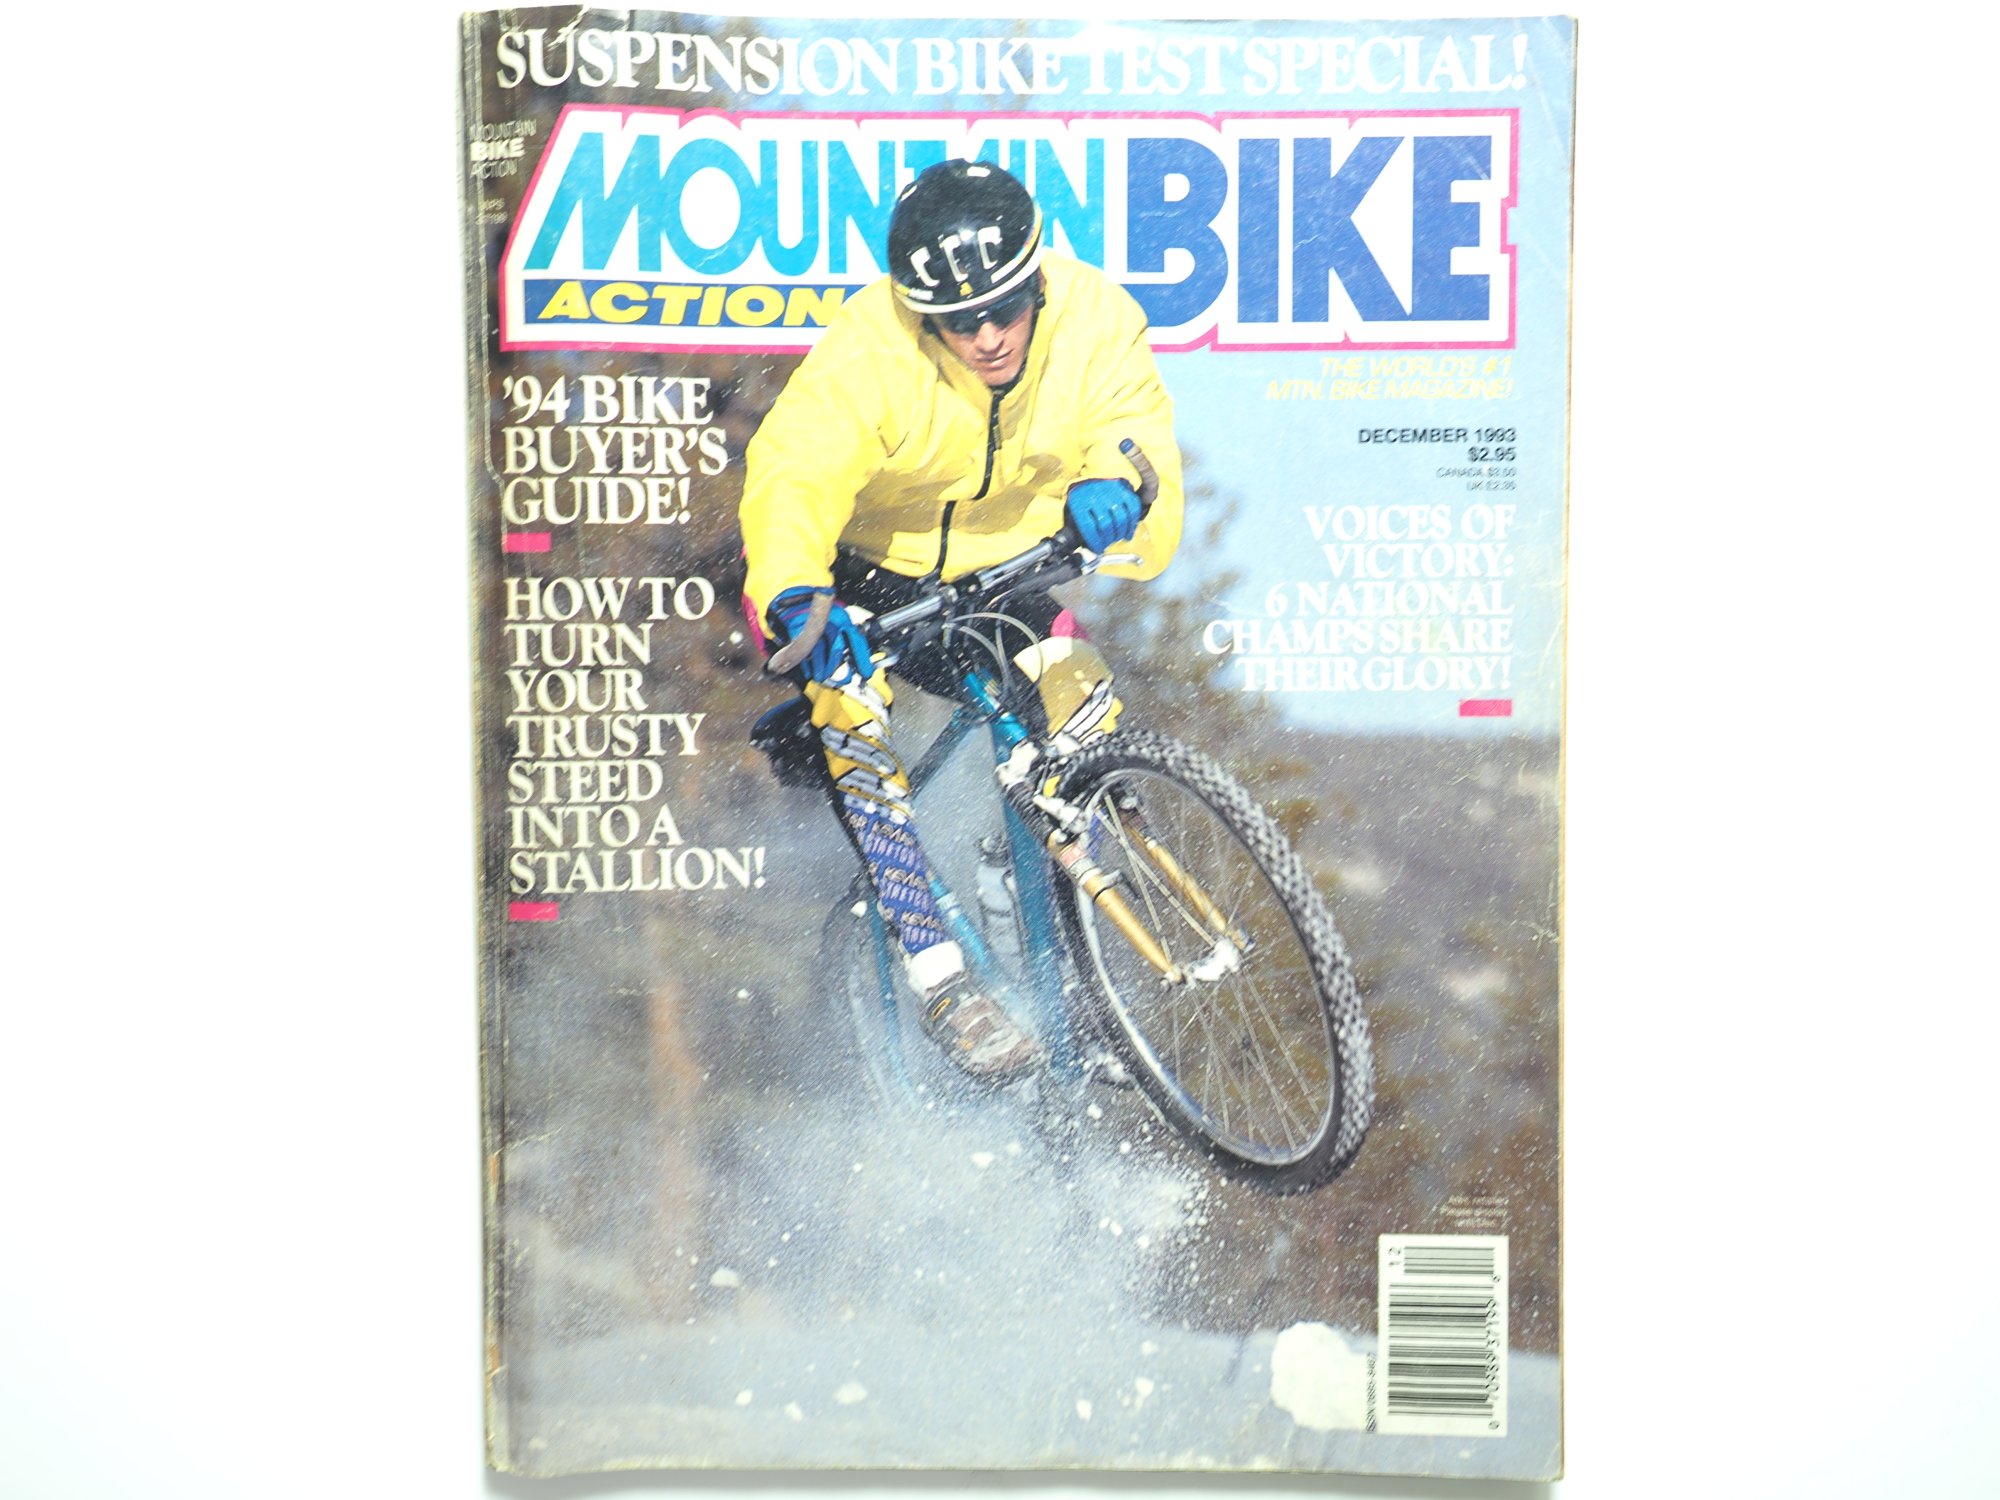 MOUNTAIN BIKE ACTION
1993(DECEMBER)